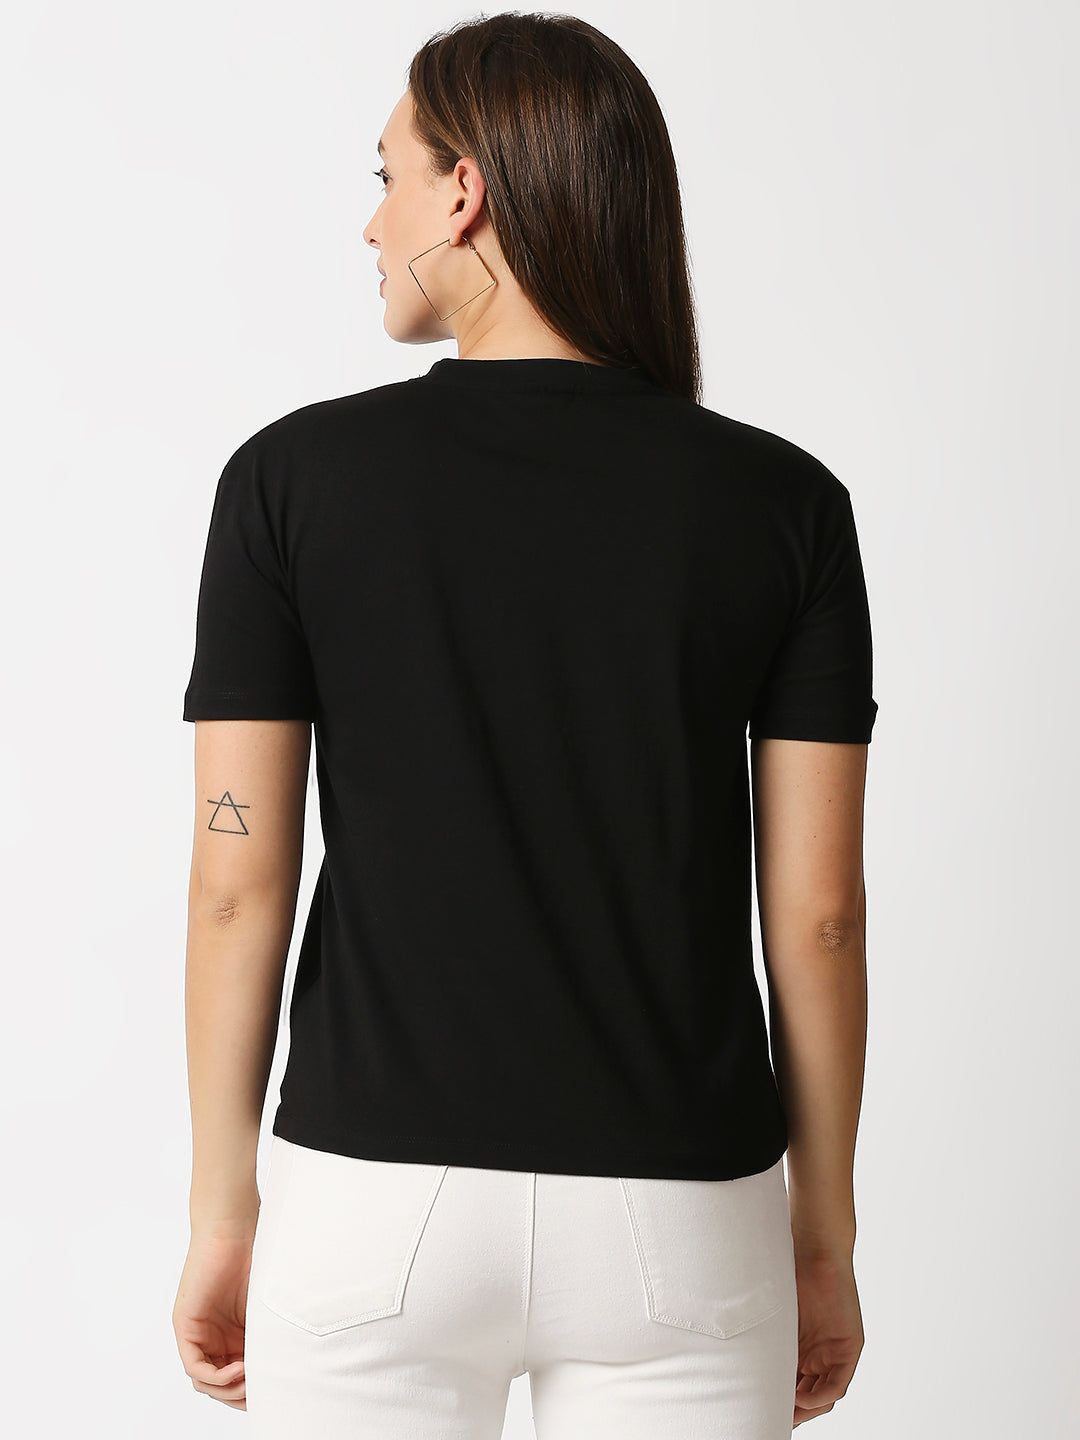 Buy Womenâ€™s Black Comfort fit Chest print T-shirt.